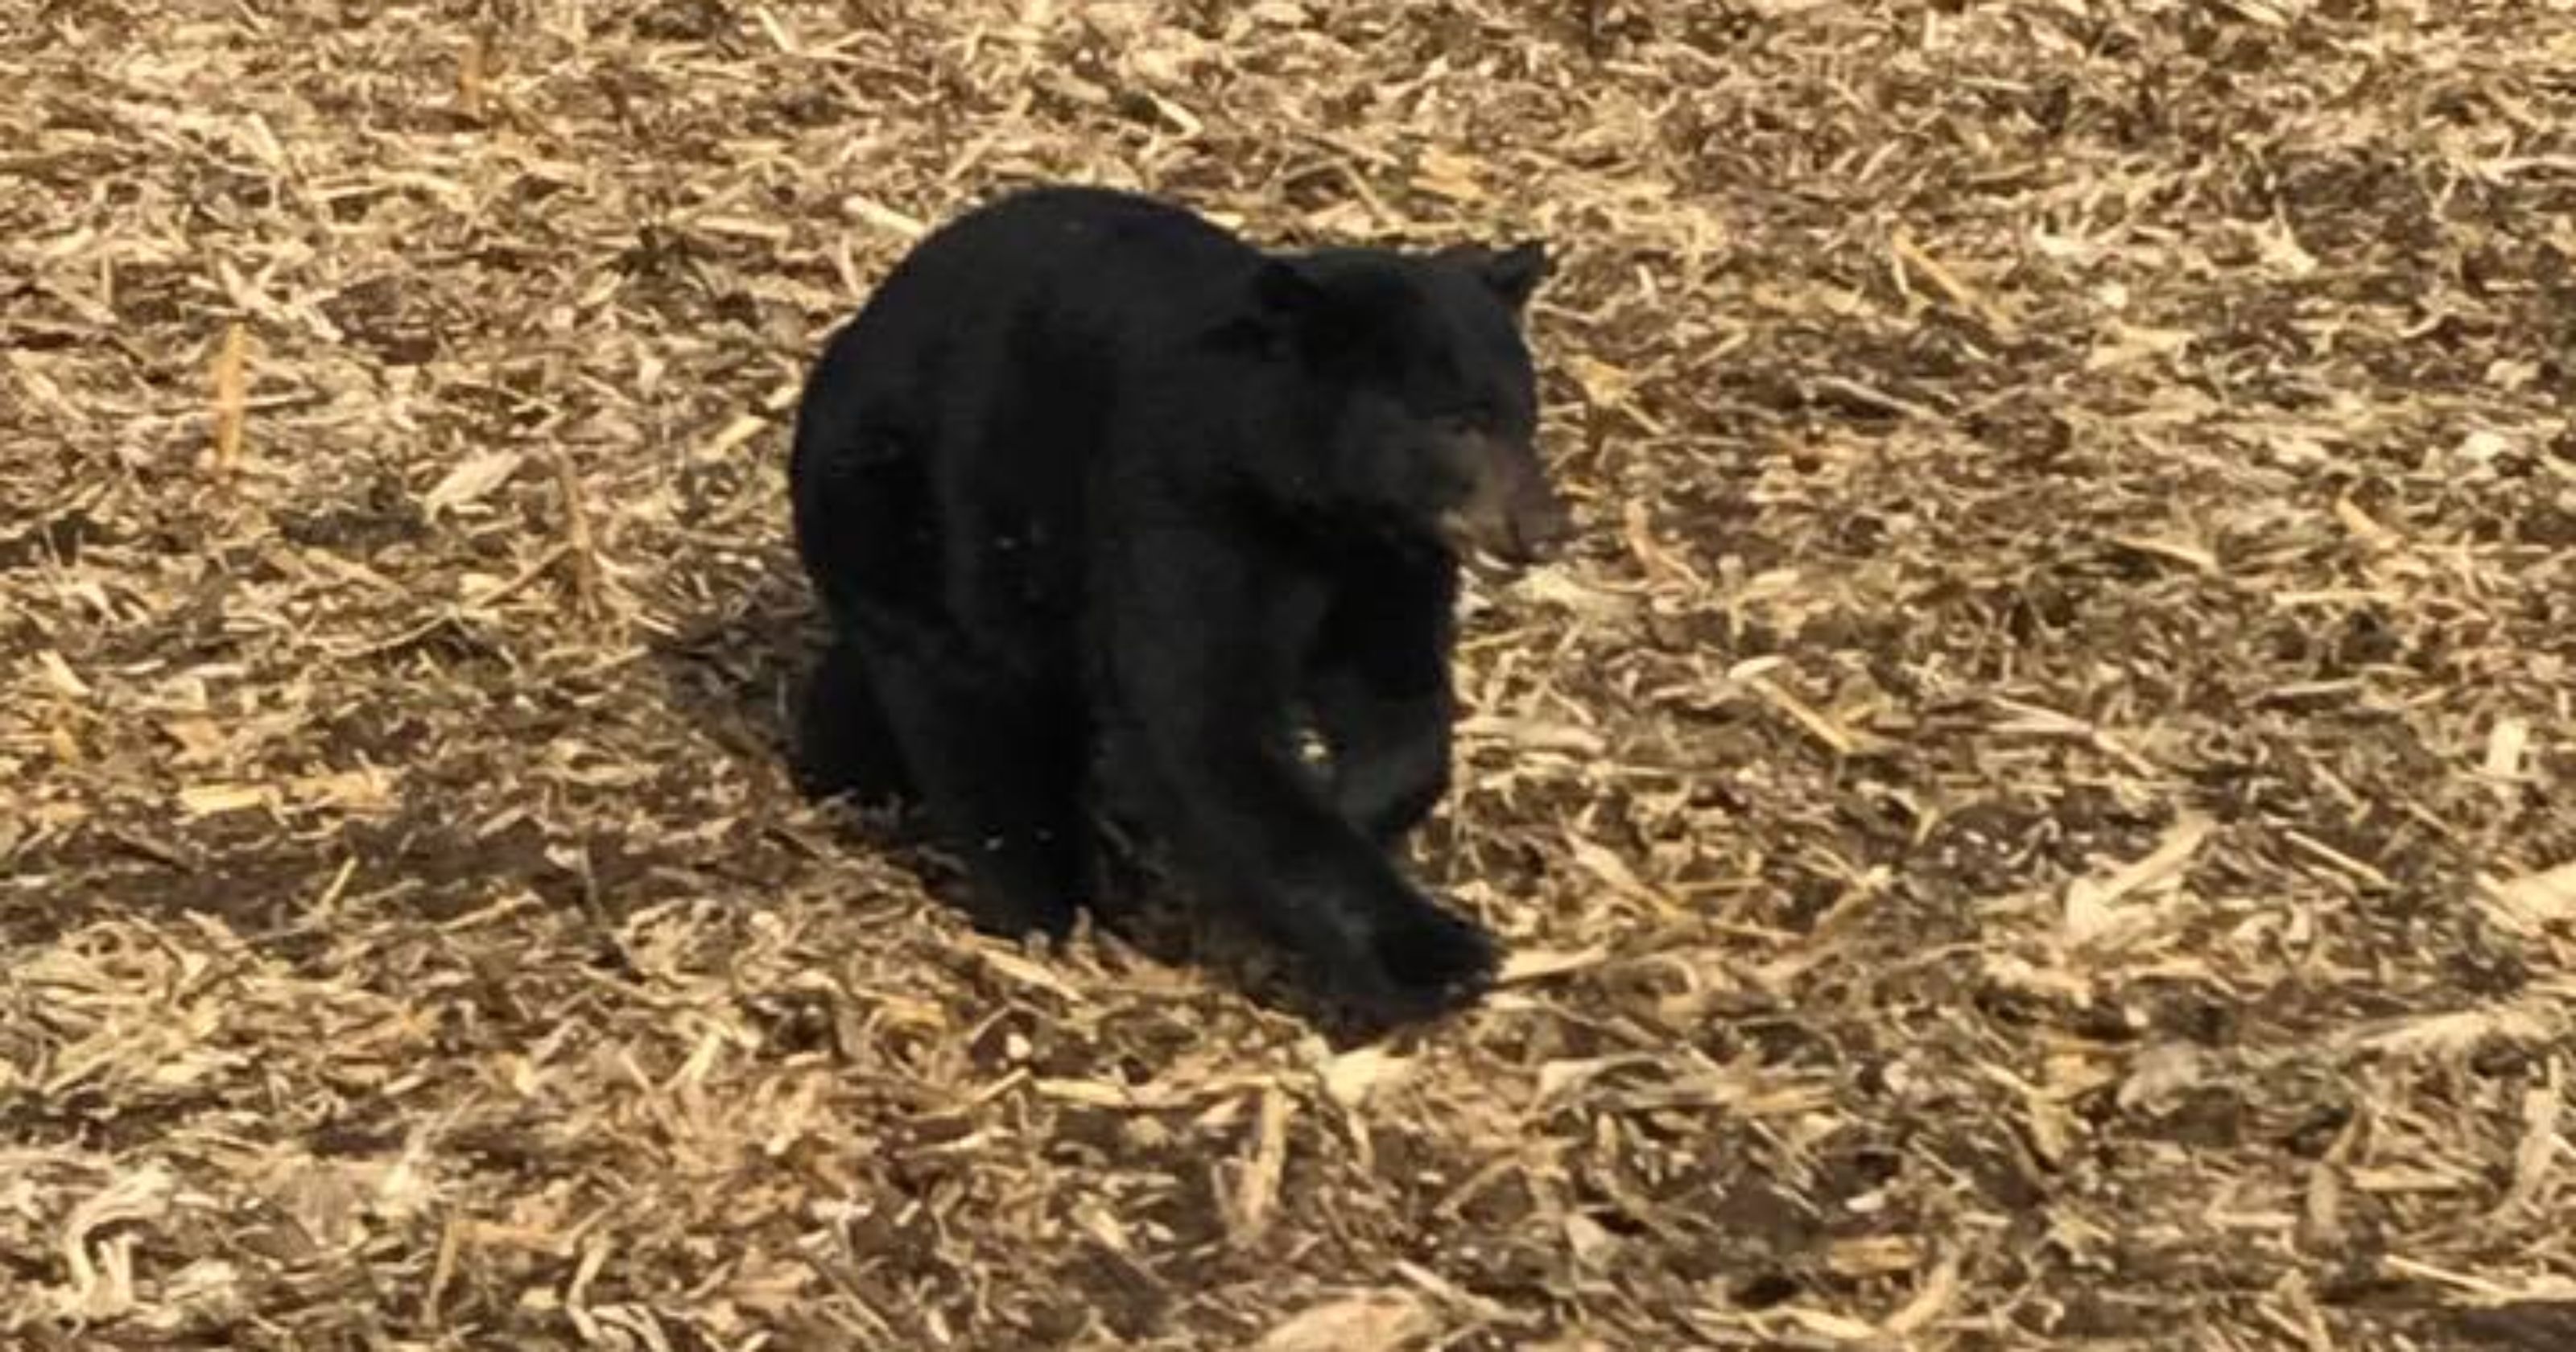 Black bear killed by van near Poweshiek County on I-80